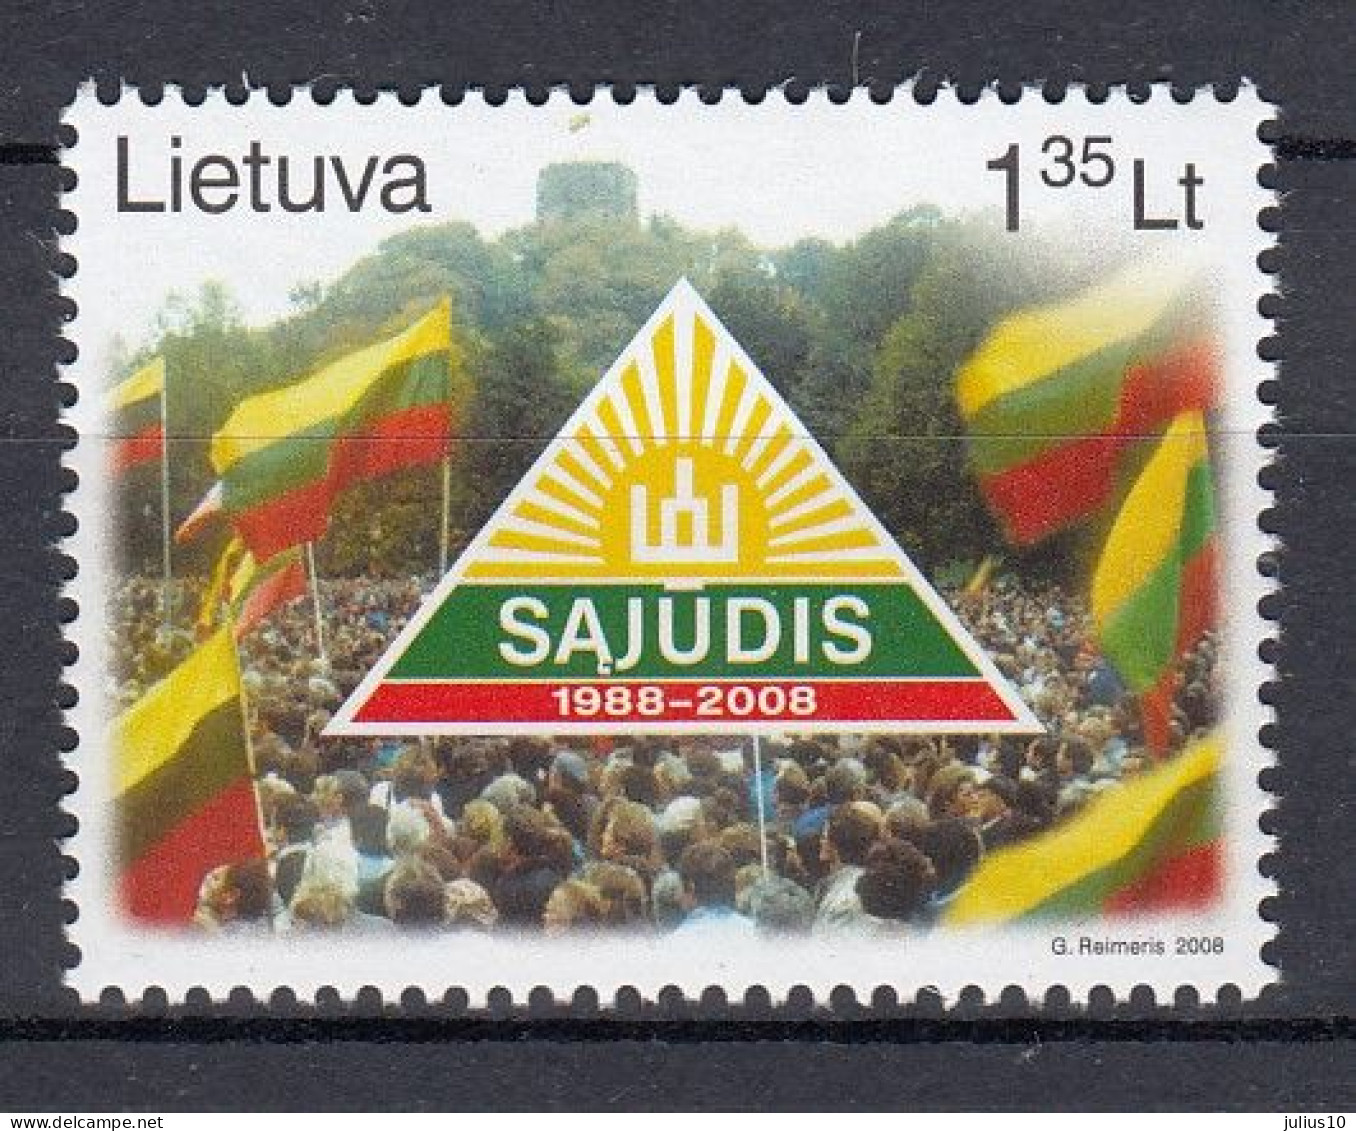 LITHUANIA 2008 Sajudis Anniversary MNH(**) Mi 972 #Lt940 - Litauen